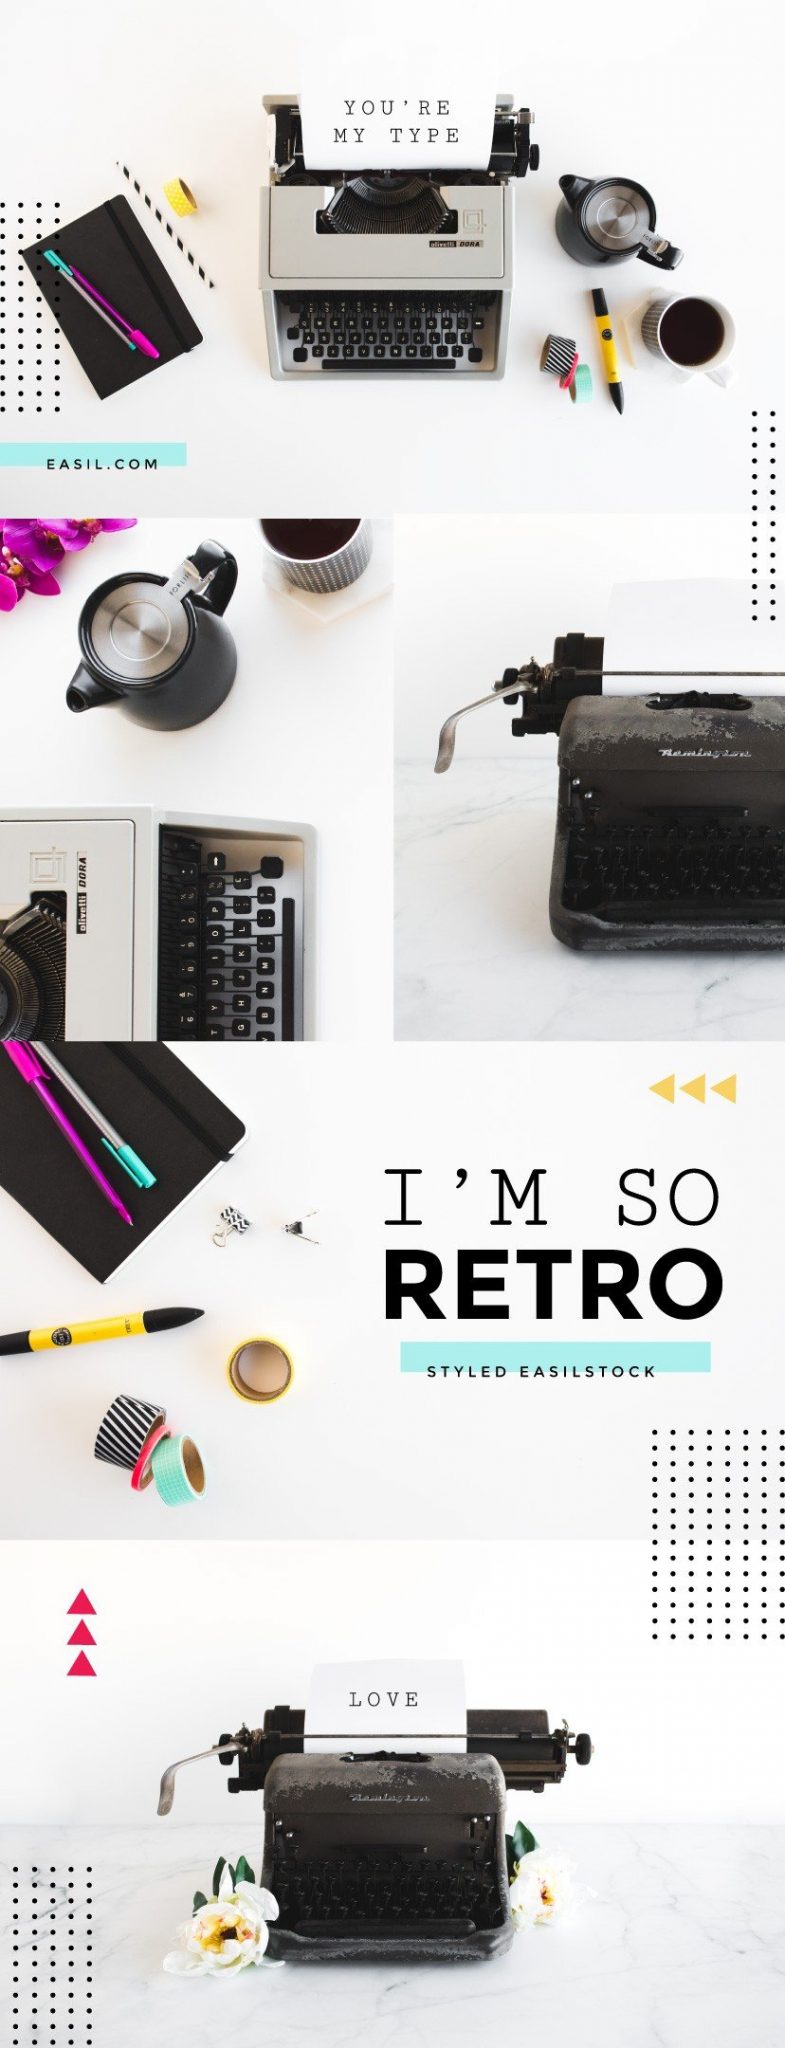 Retro styled stock with typewriter